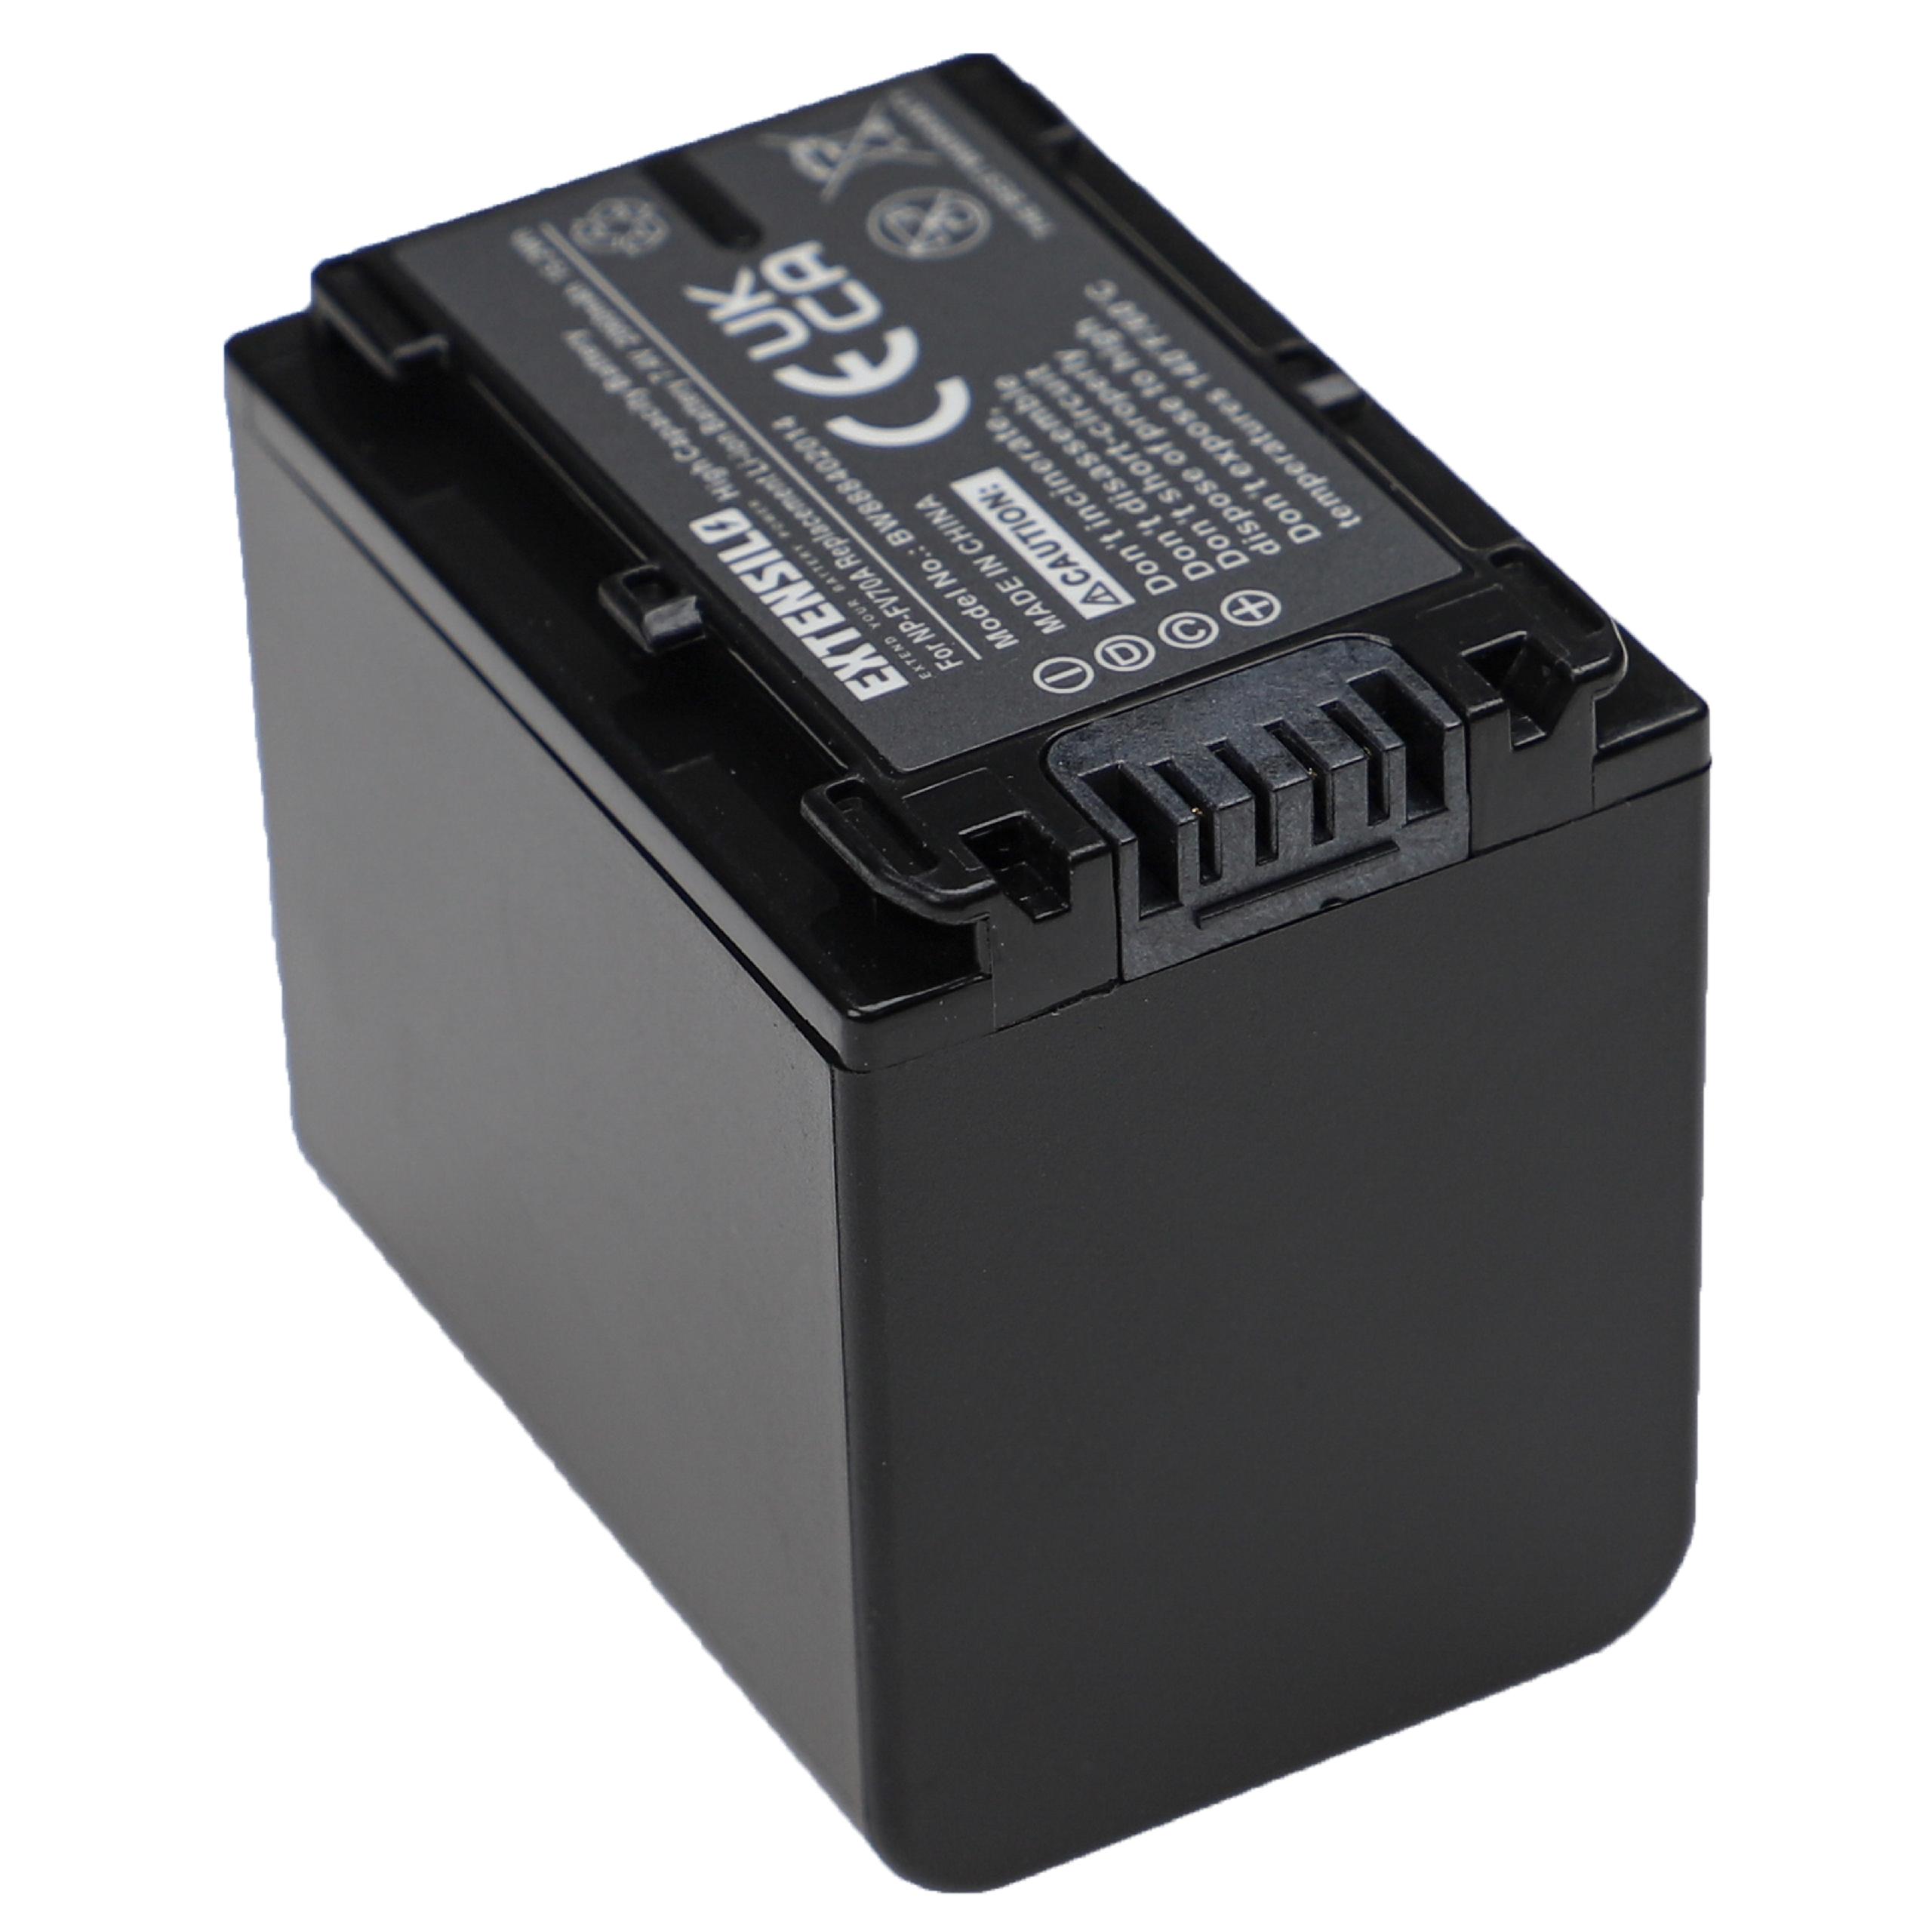 Akumulator do aparatu cyfrowego zamiennik Sony NP-FV50, NP-FV100, NP-FV40, NP-FV30 - 2060 mAh 7,4 V Li-Ion